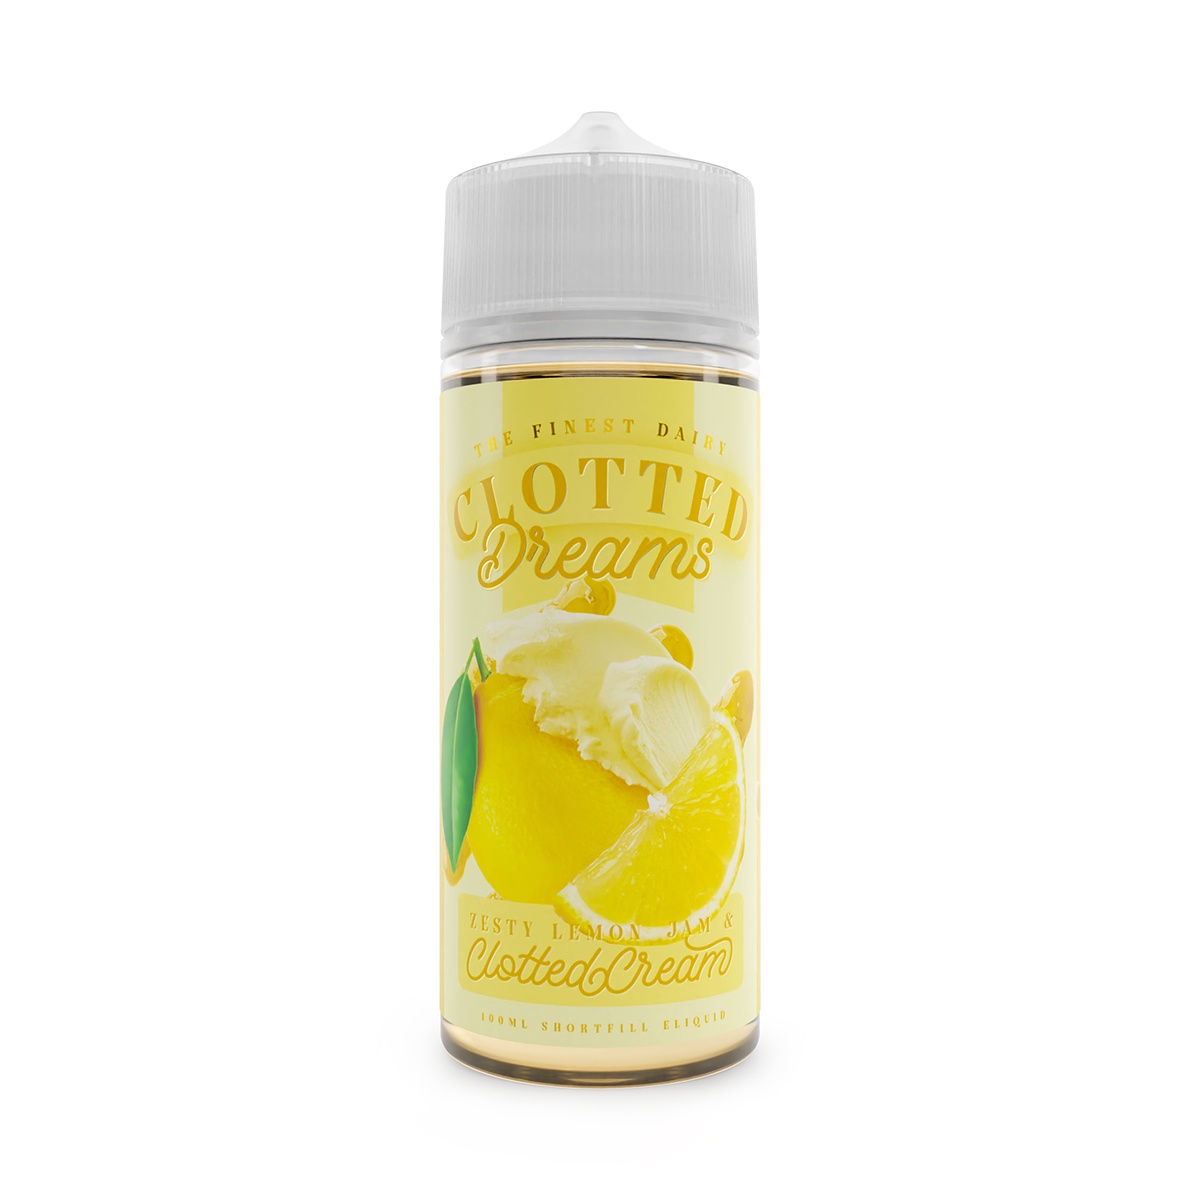 Clotted Dreams E-liquid 100ml Shortfill Zesty Lemon Jam & Clotted Cream